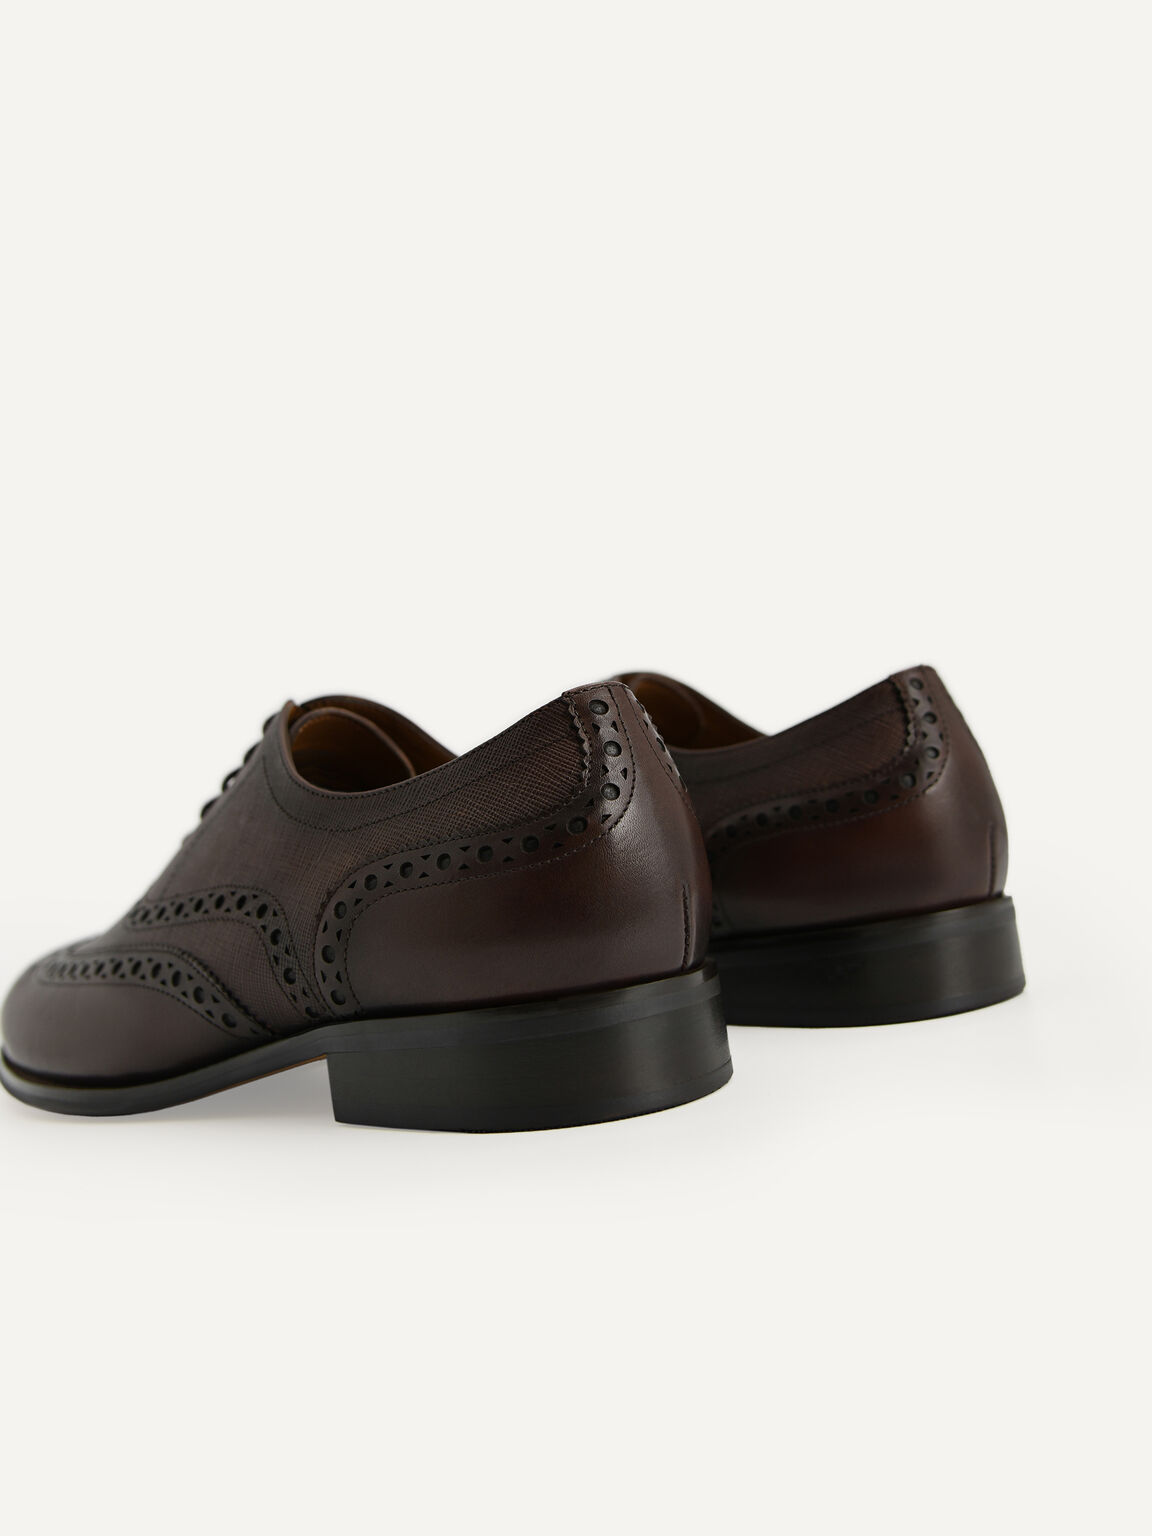 Textured Brogue Oxford Shoes, Dark Brown